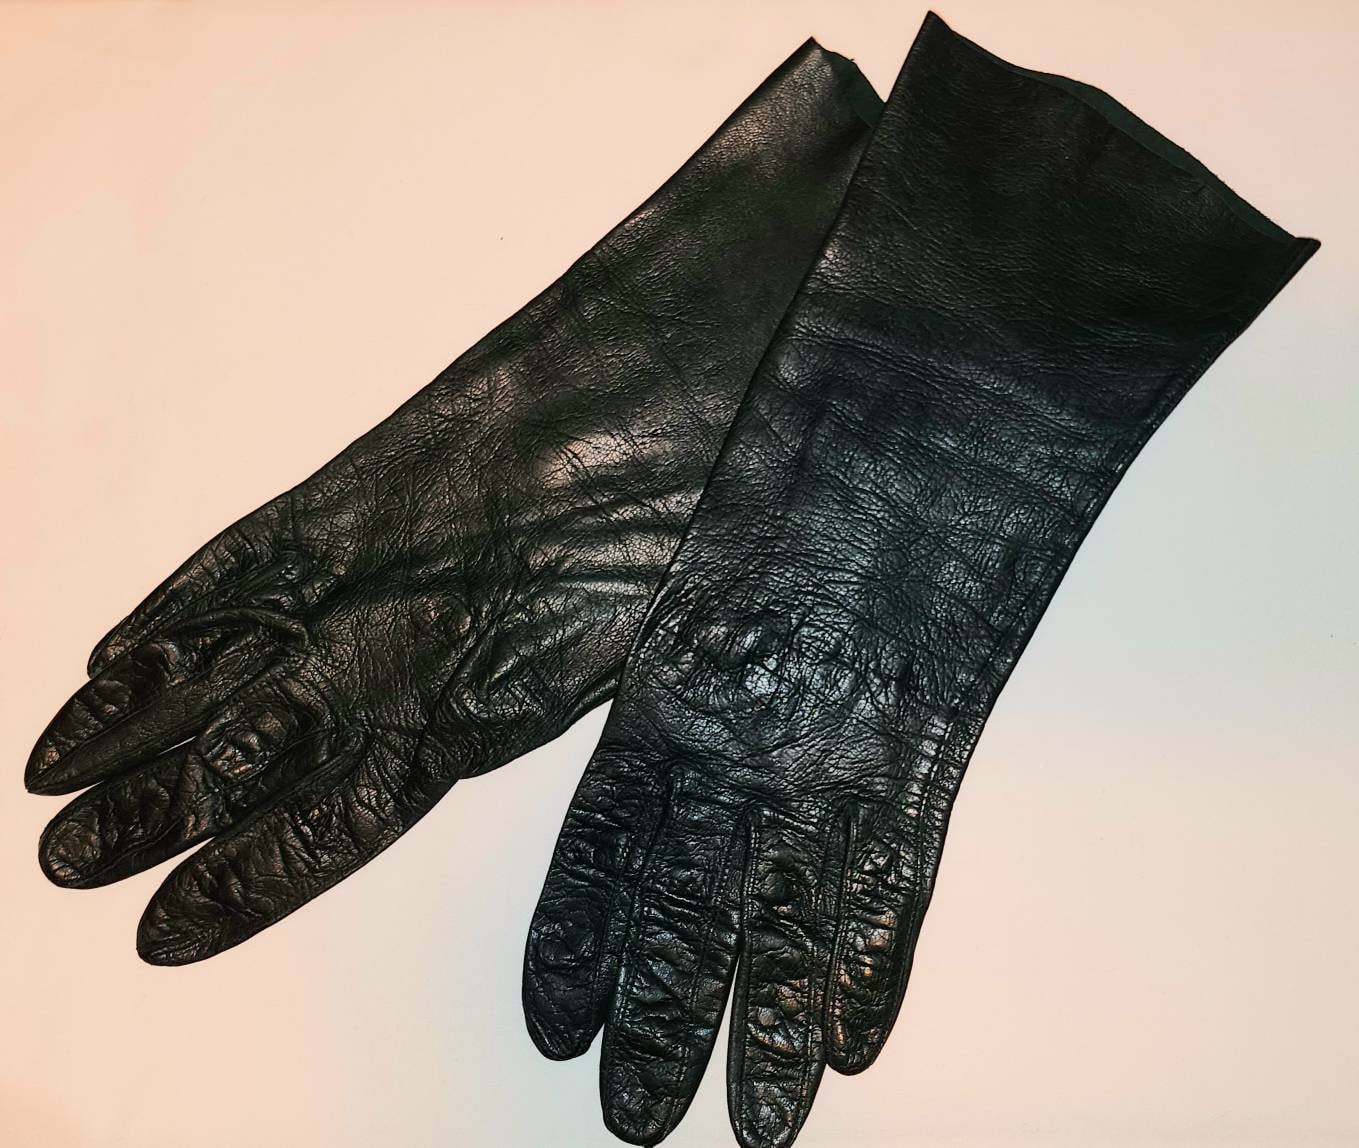 Vintage Leather Gloves 1950s 60s Midlength Thin Dark Green Leather Gloves Made in Italy Italian Leather Mid Century 7